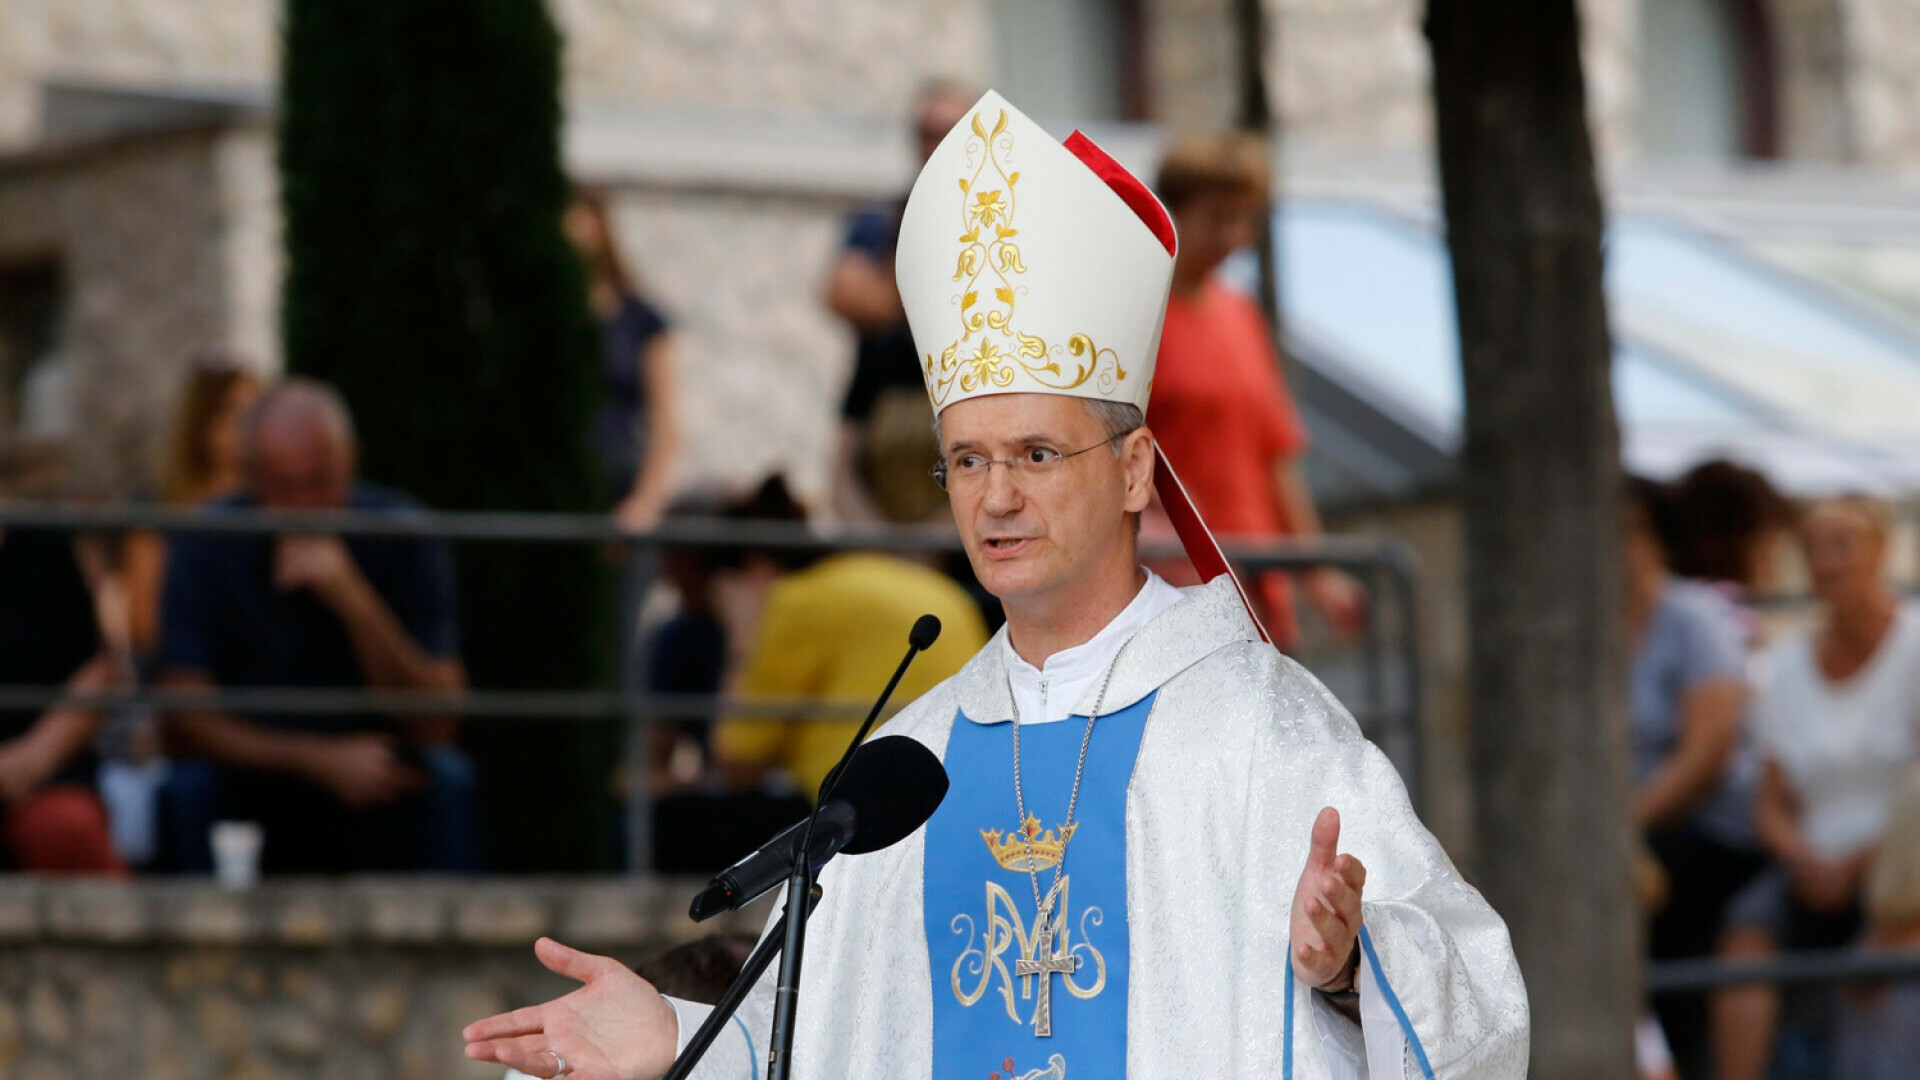 Potvrda s Kaptola: Kardinal Bozanić odlazi odmah, Kutleša je novi nadbiskup